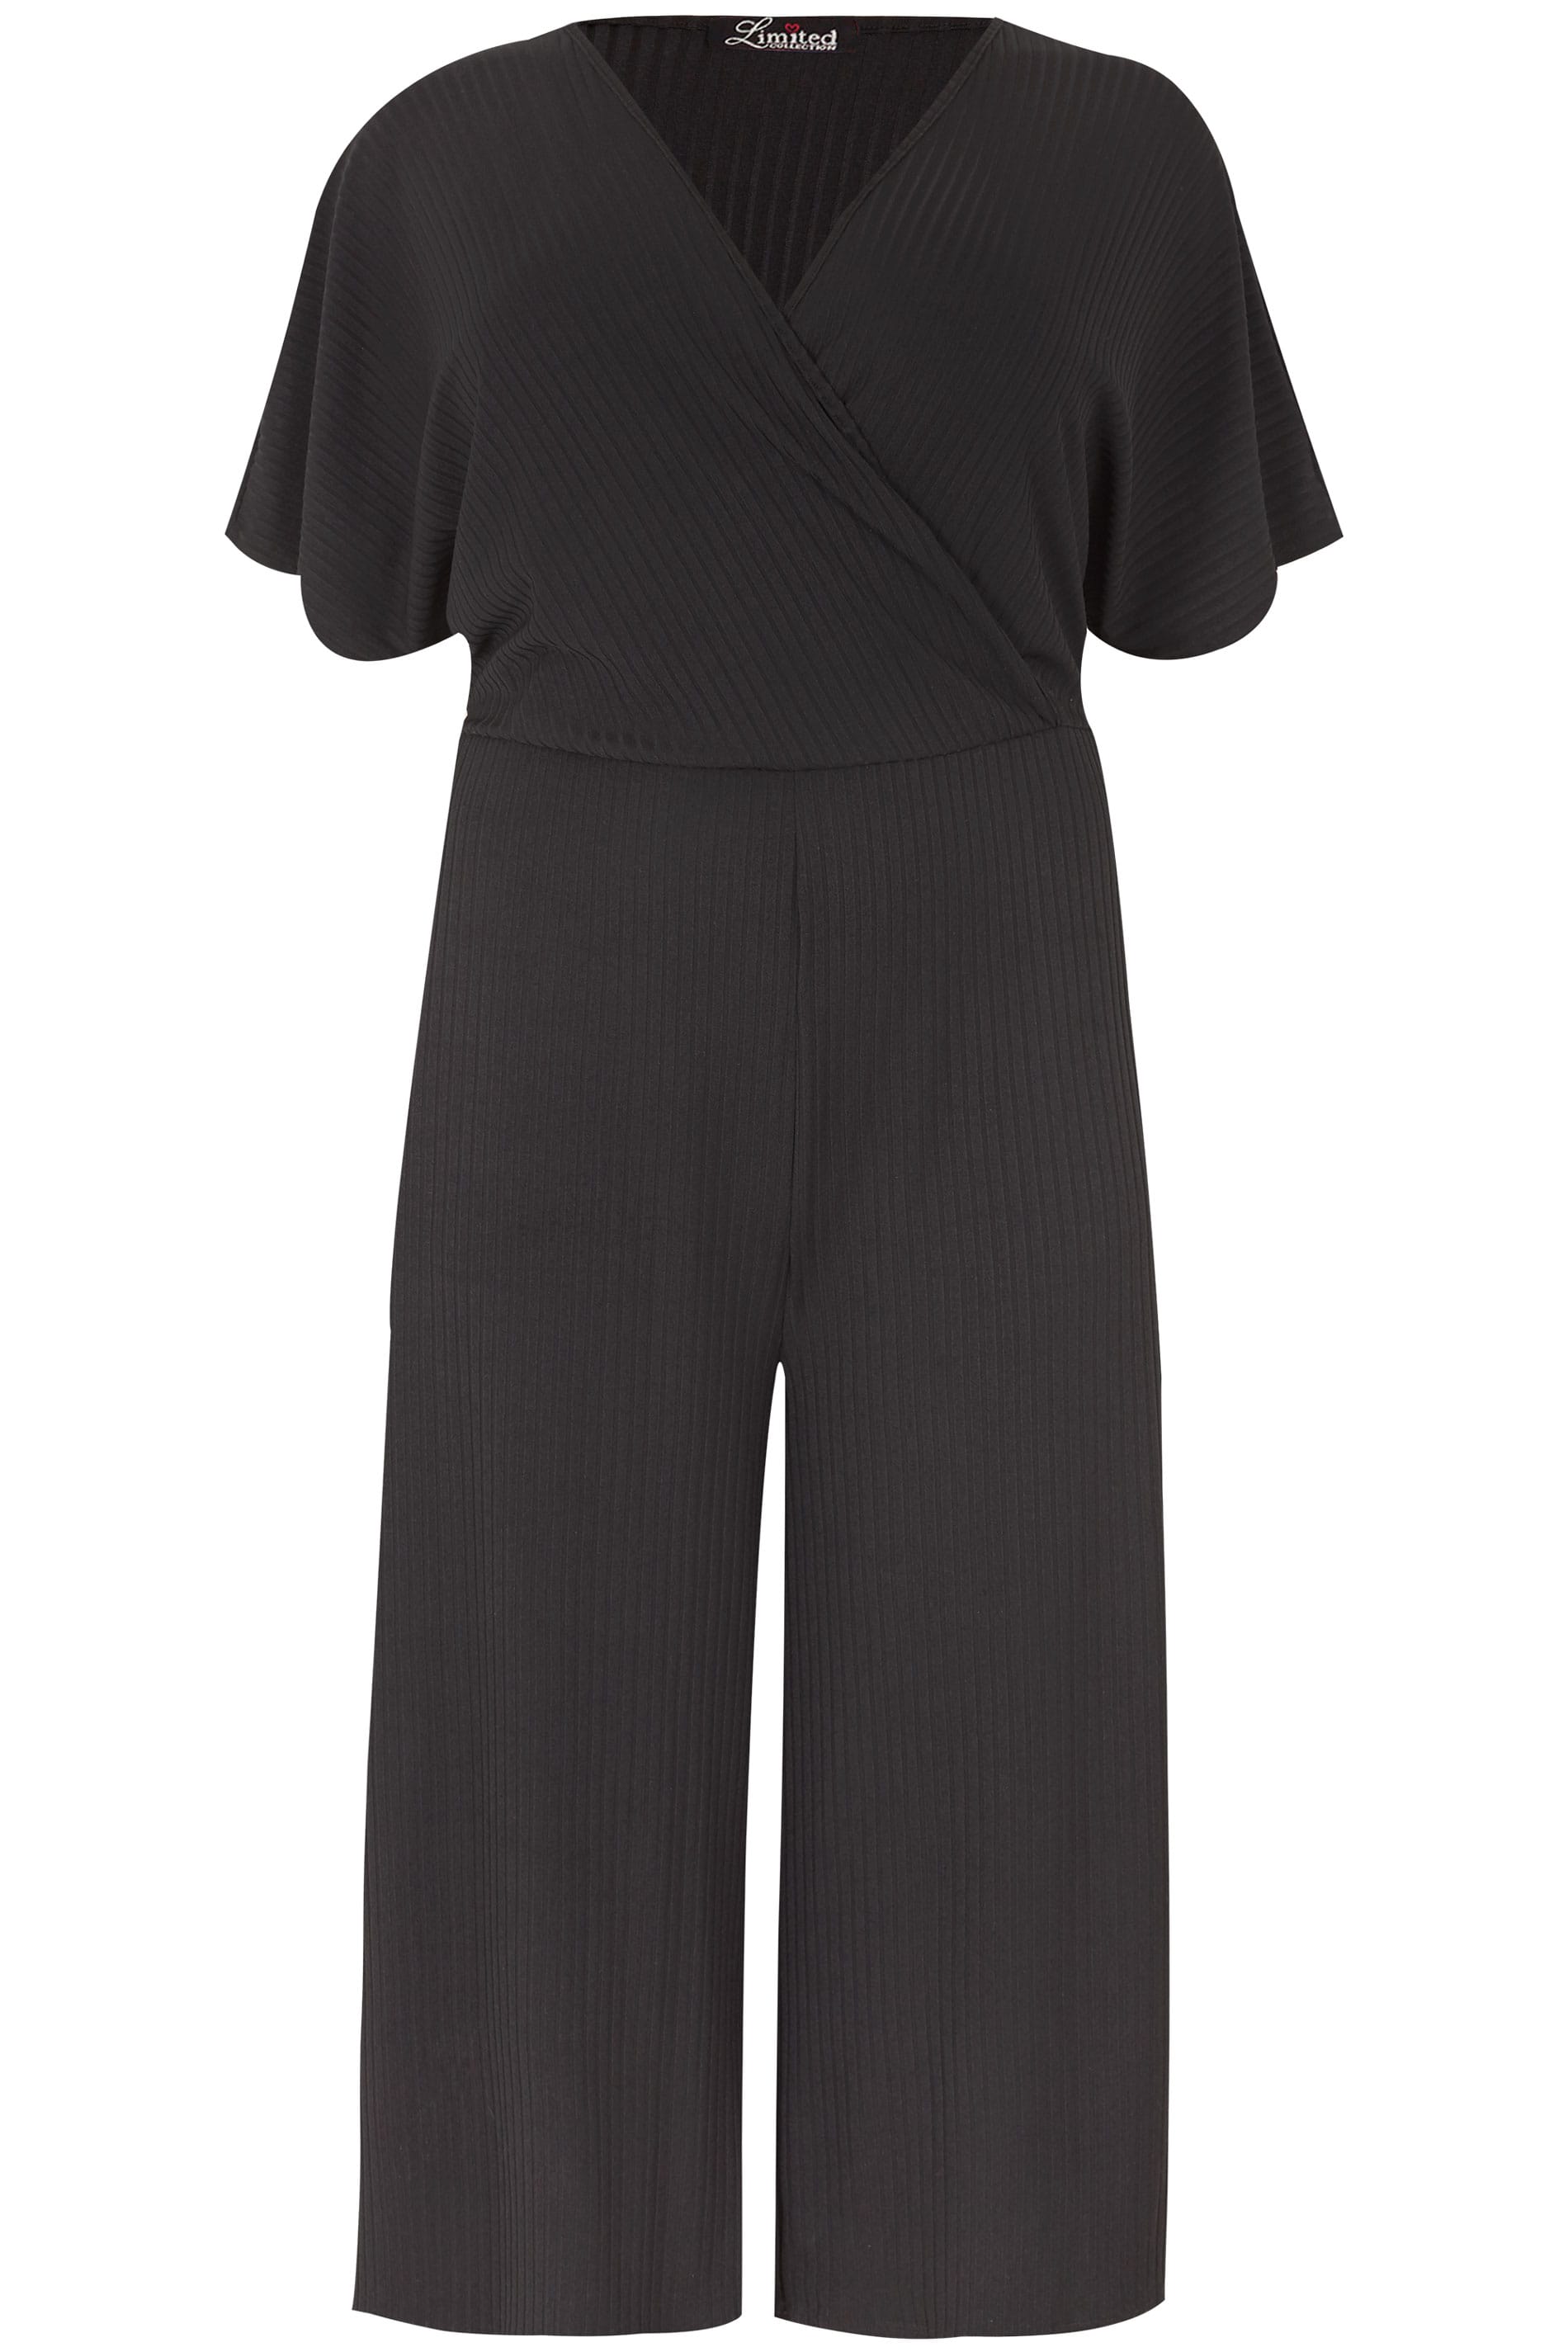 Black Jersey Cropped Culotte Wrap Front Jumpsuit, plus size 16 to 32 ...